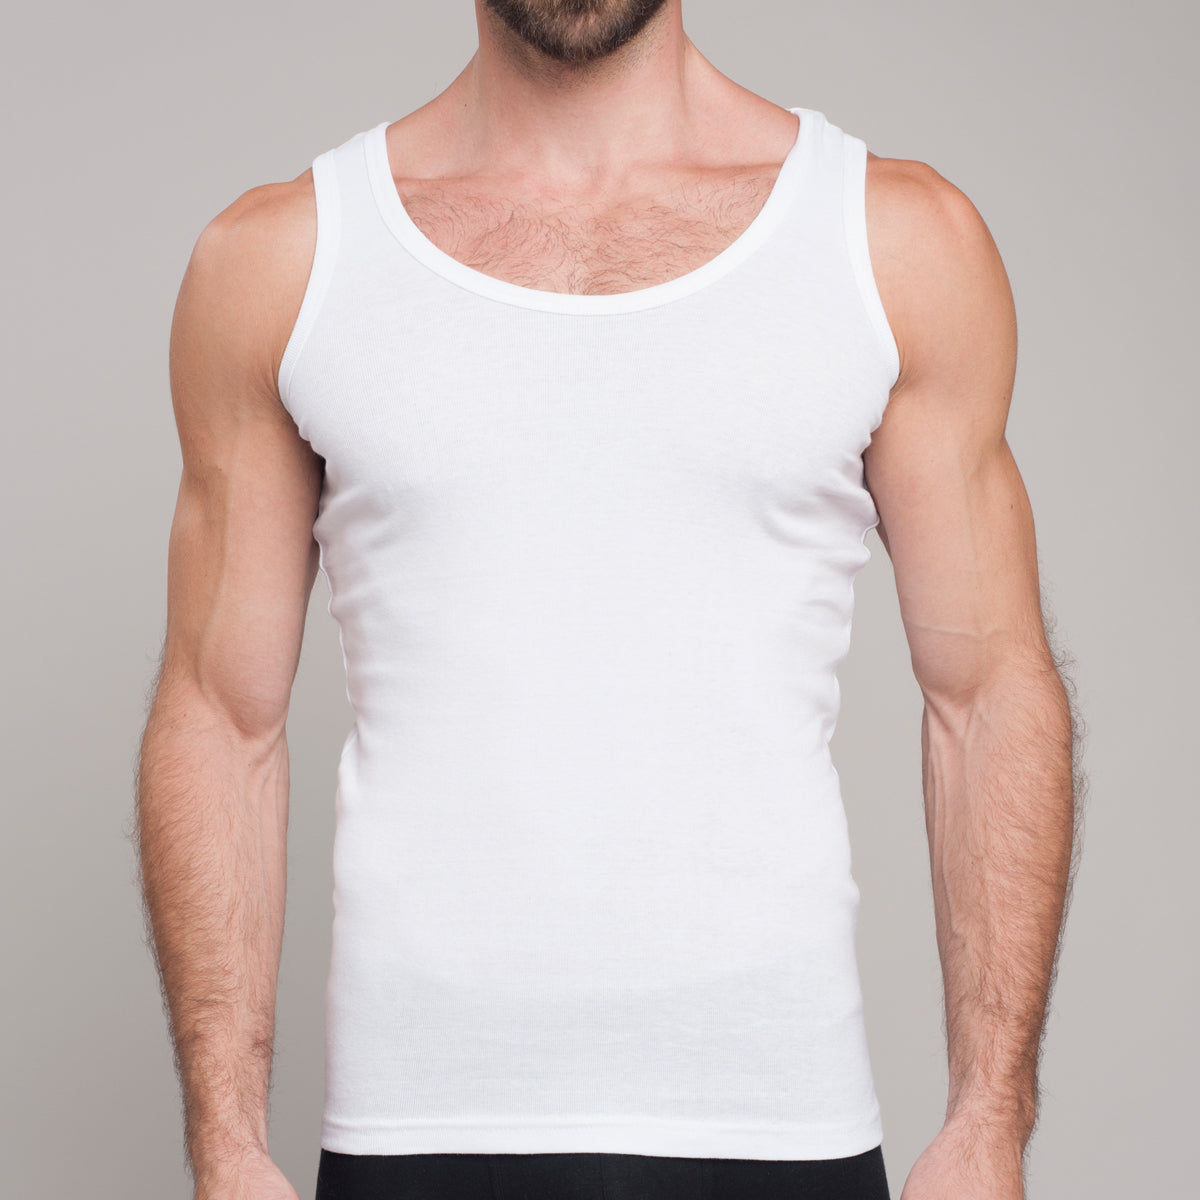 Camisetas blancas sin manga para hombre